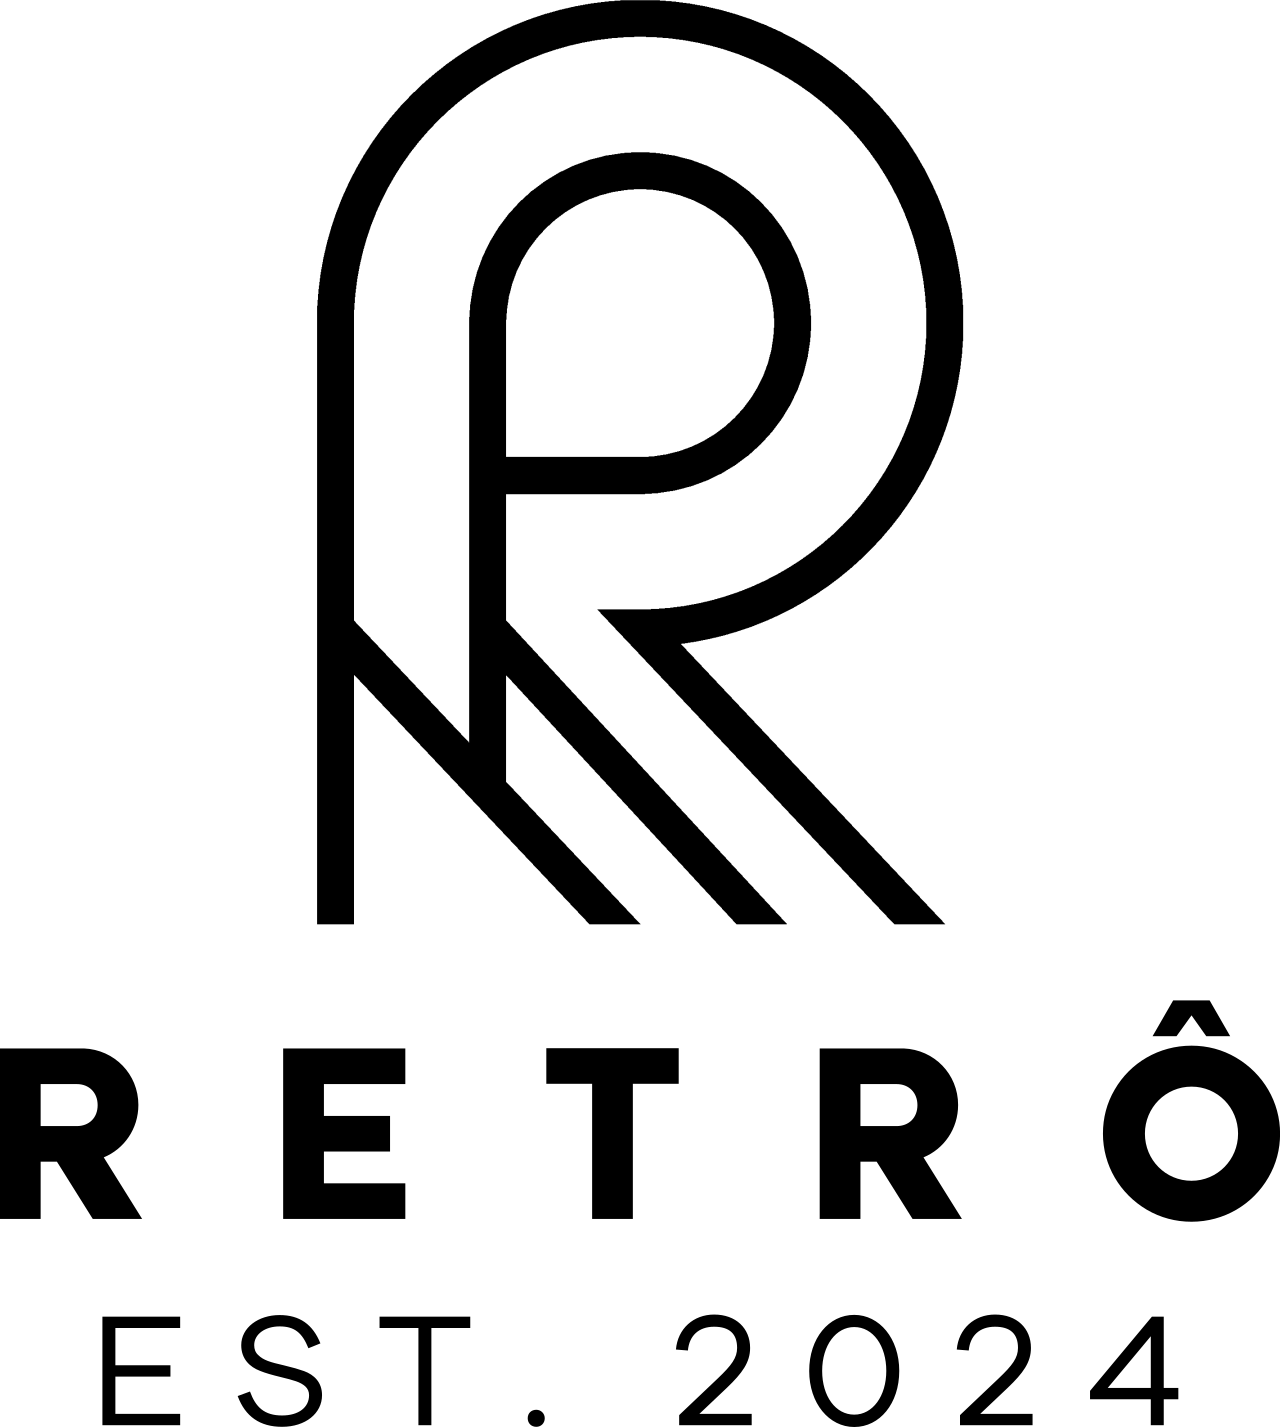 Retrô's logo